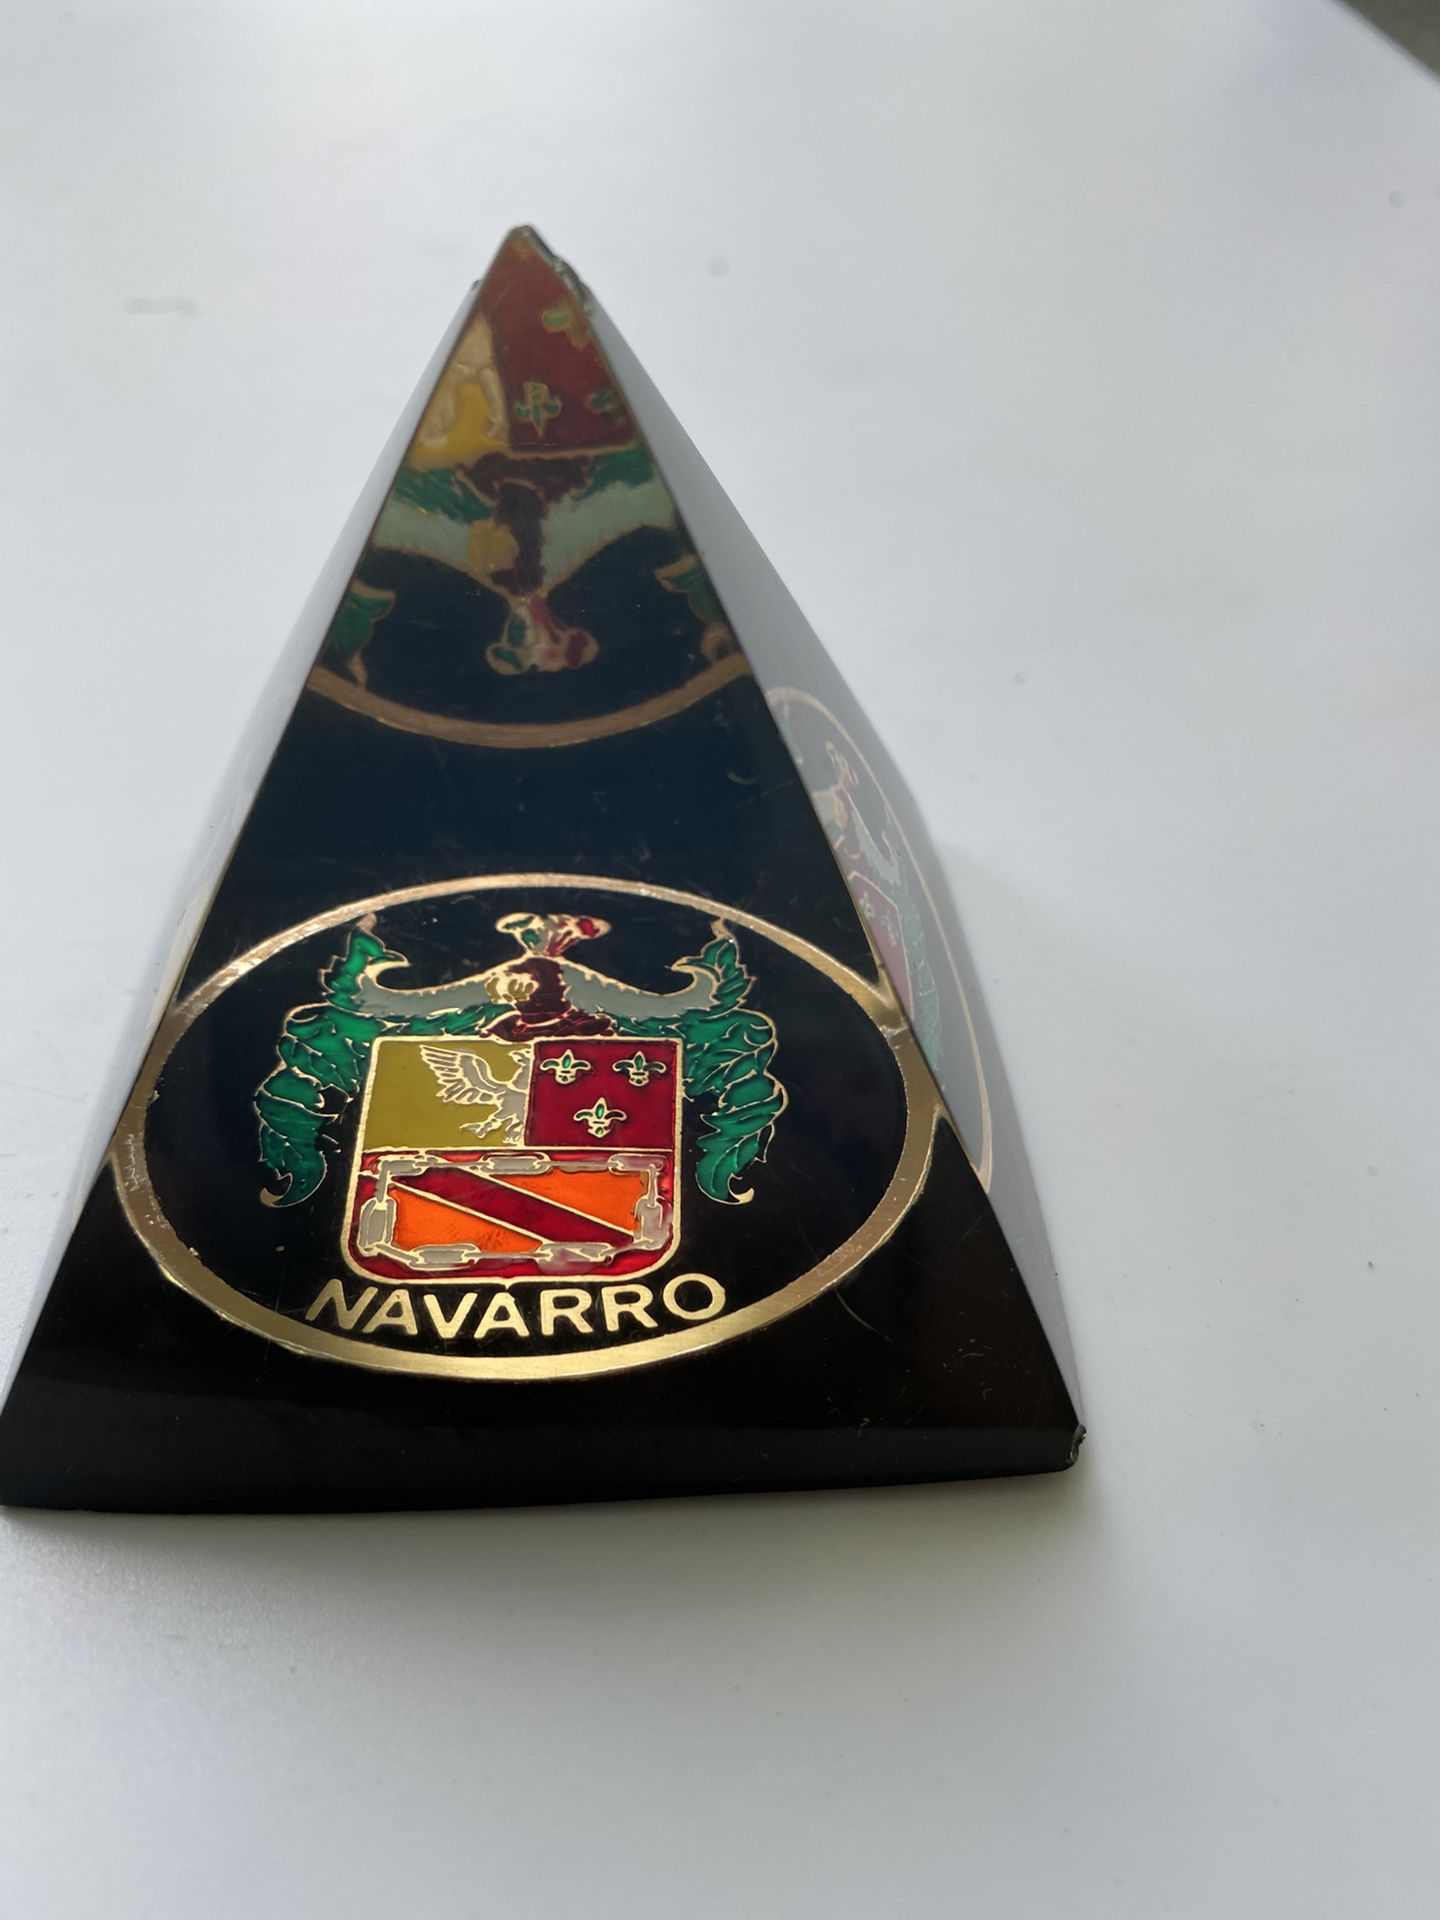 Vtg. Triangle paperweight “Navarro “